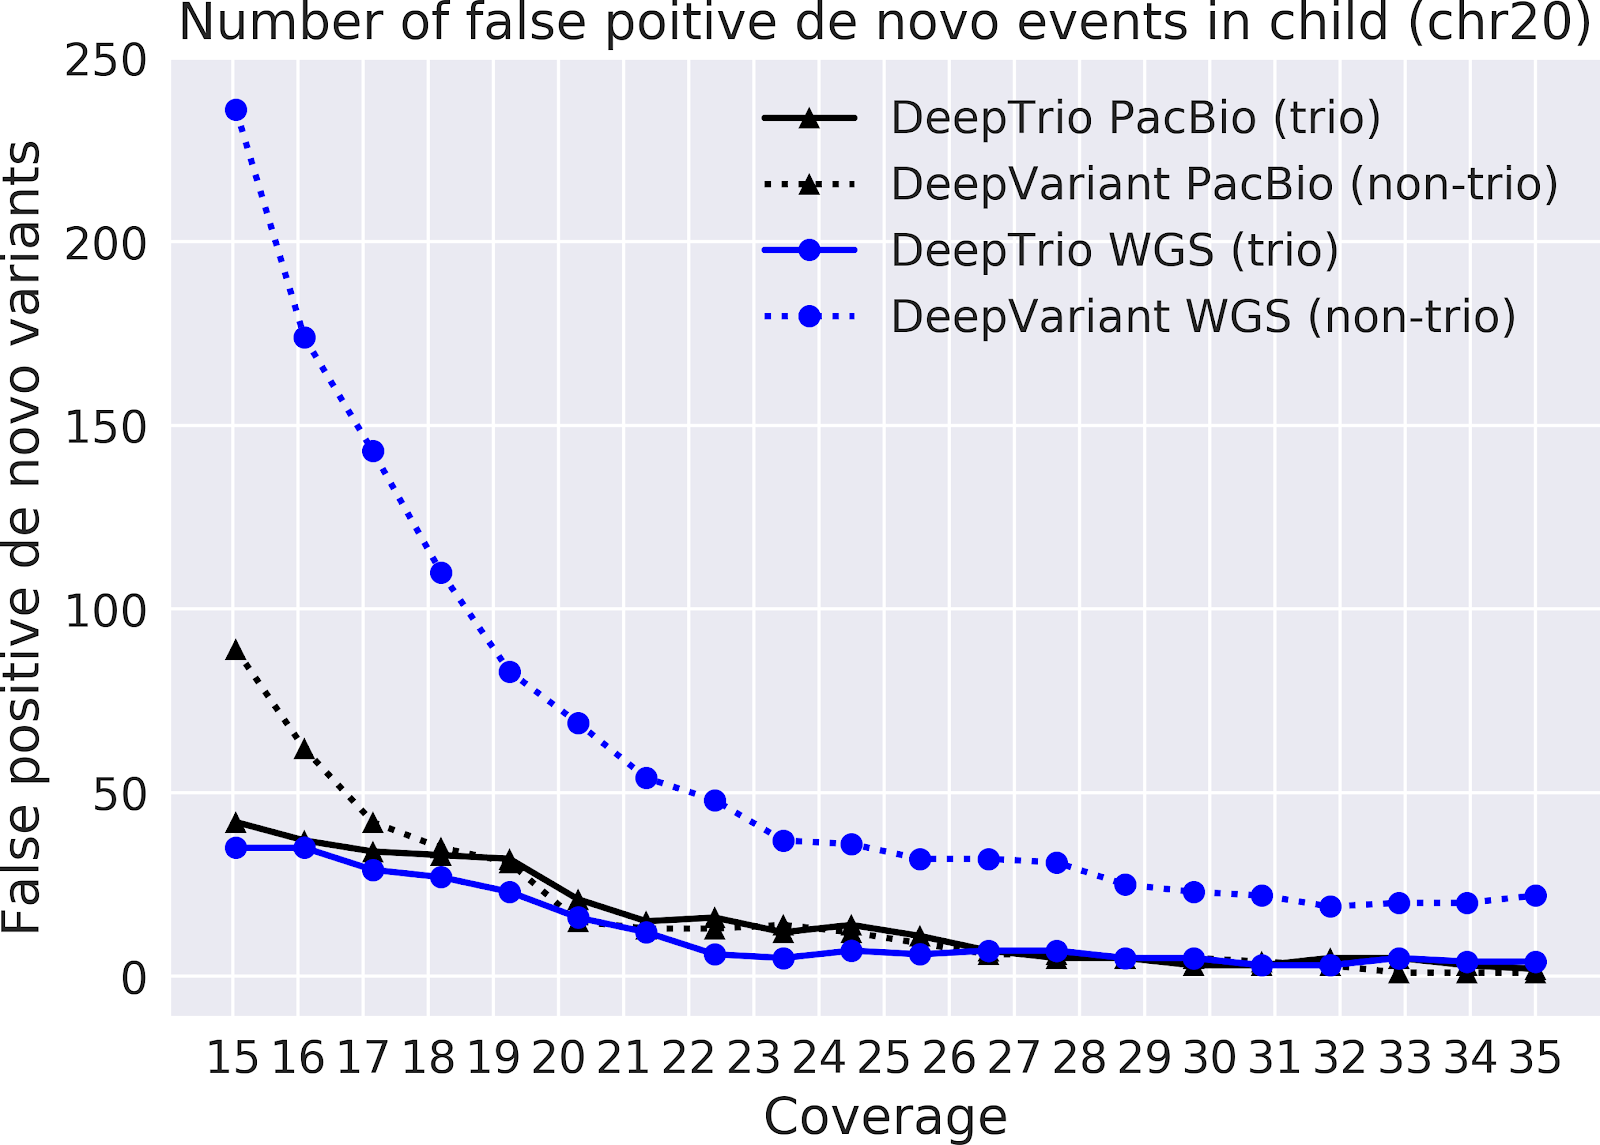 Accuracy on de novo calls (child heterozygous variant, parents reference call) for recall of false positive de novo events